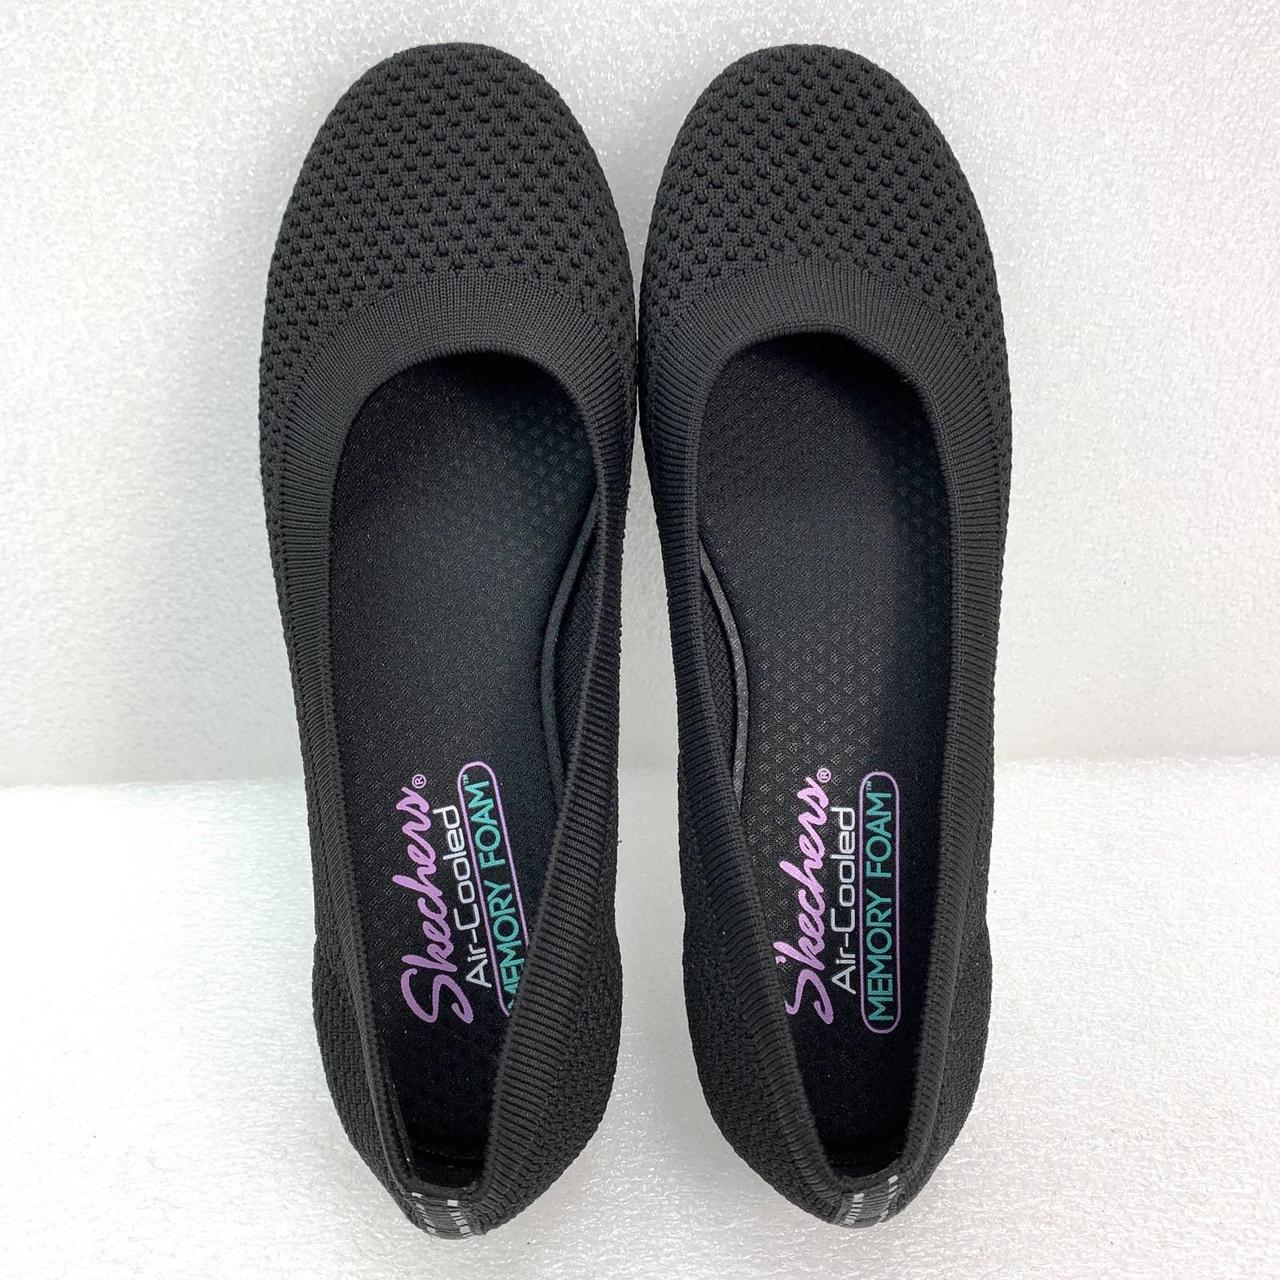 SKECHERS Cleo Sport Flat Shoes in Solid Black Size... - Depop